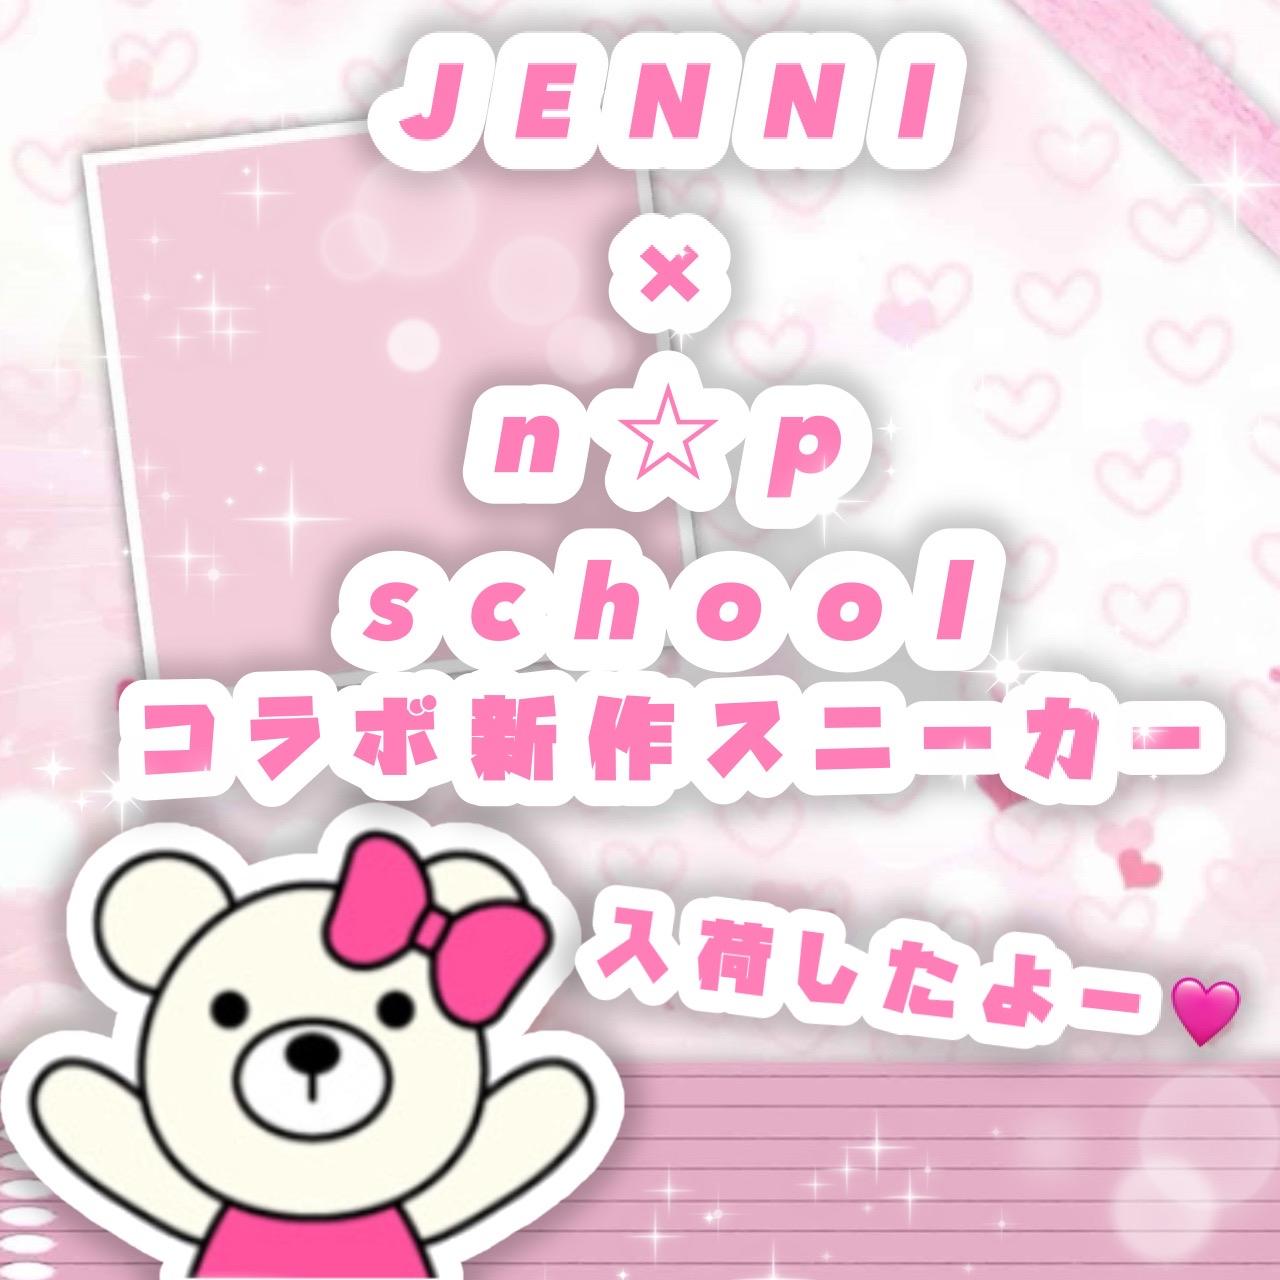 JENNI×n☆p schoolのコラボスニーカー２弾が入荷したよ～♡